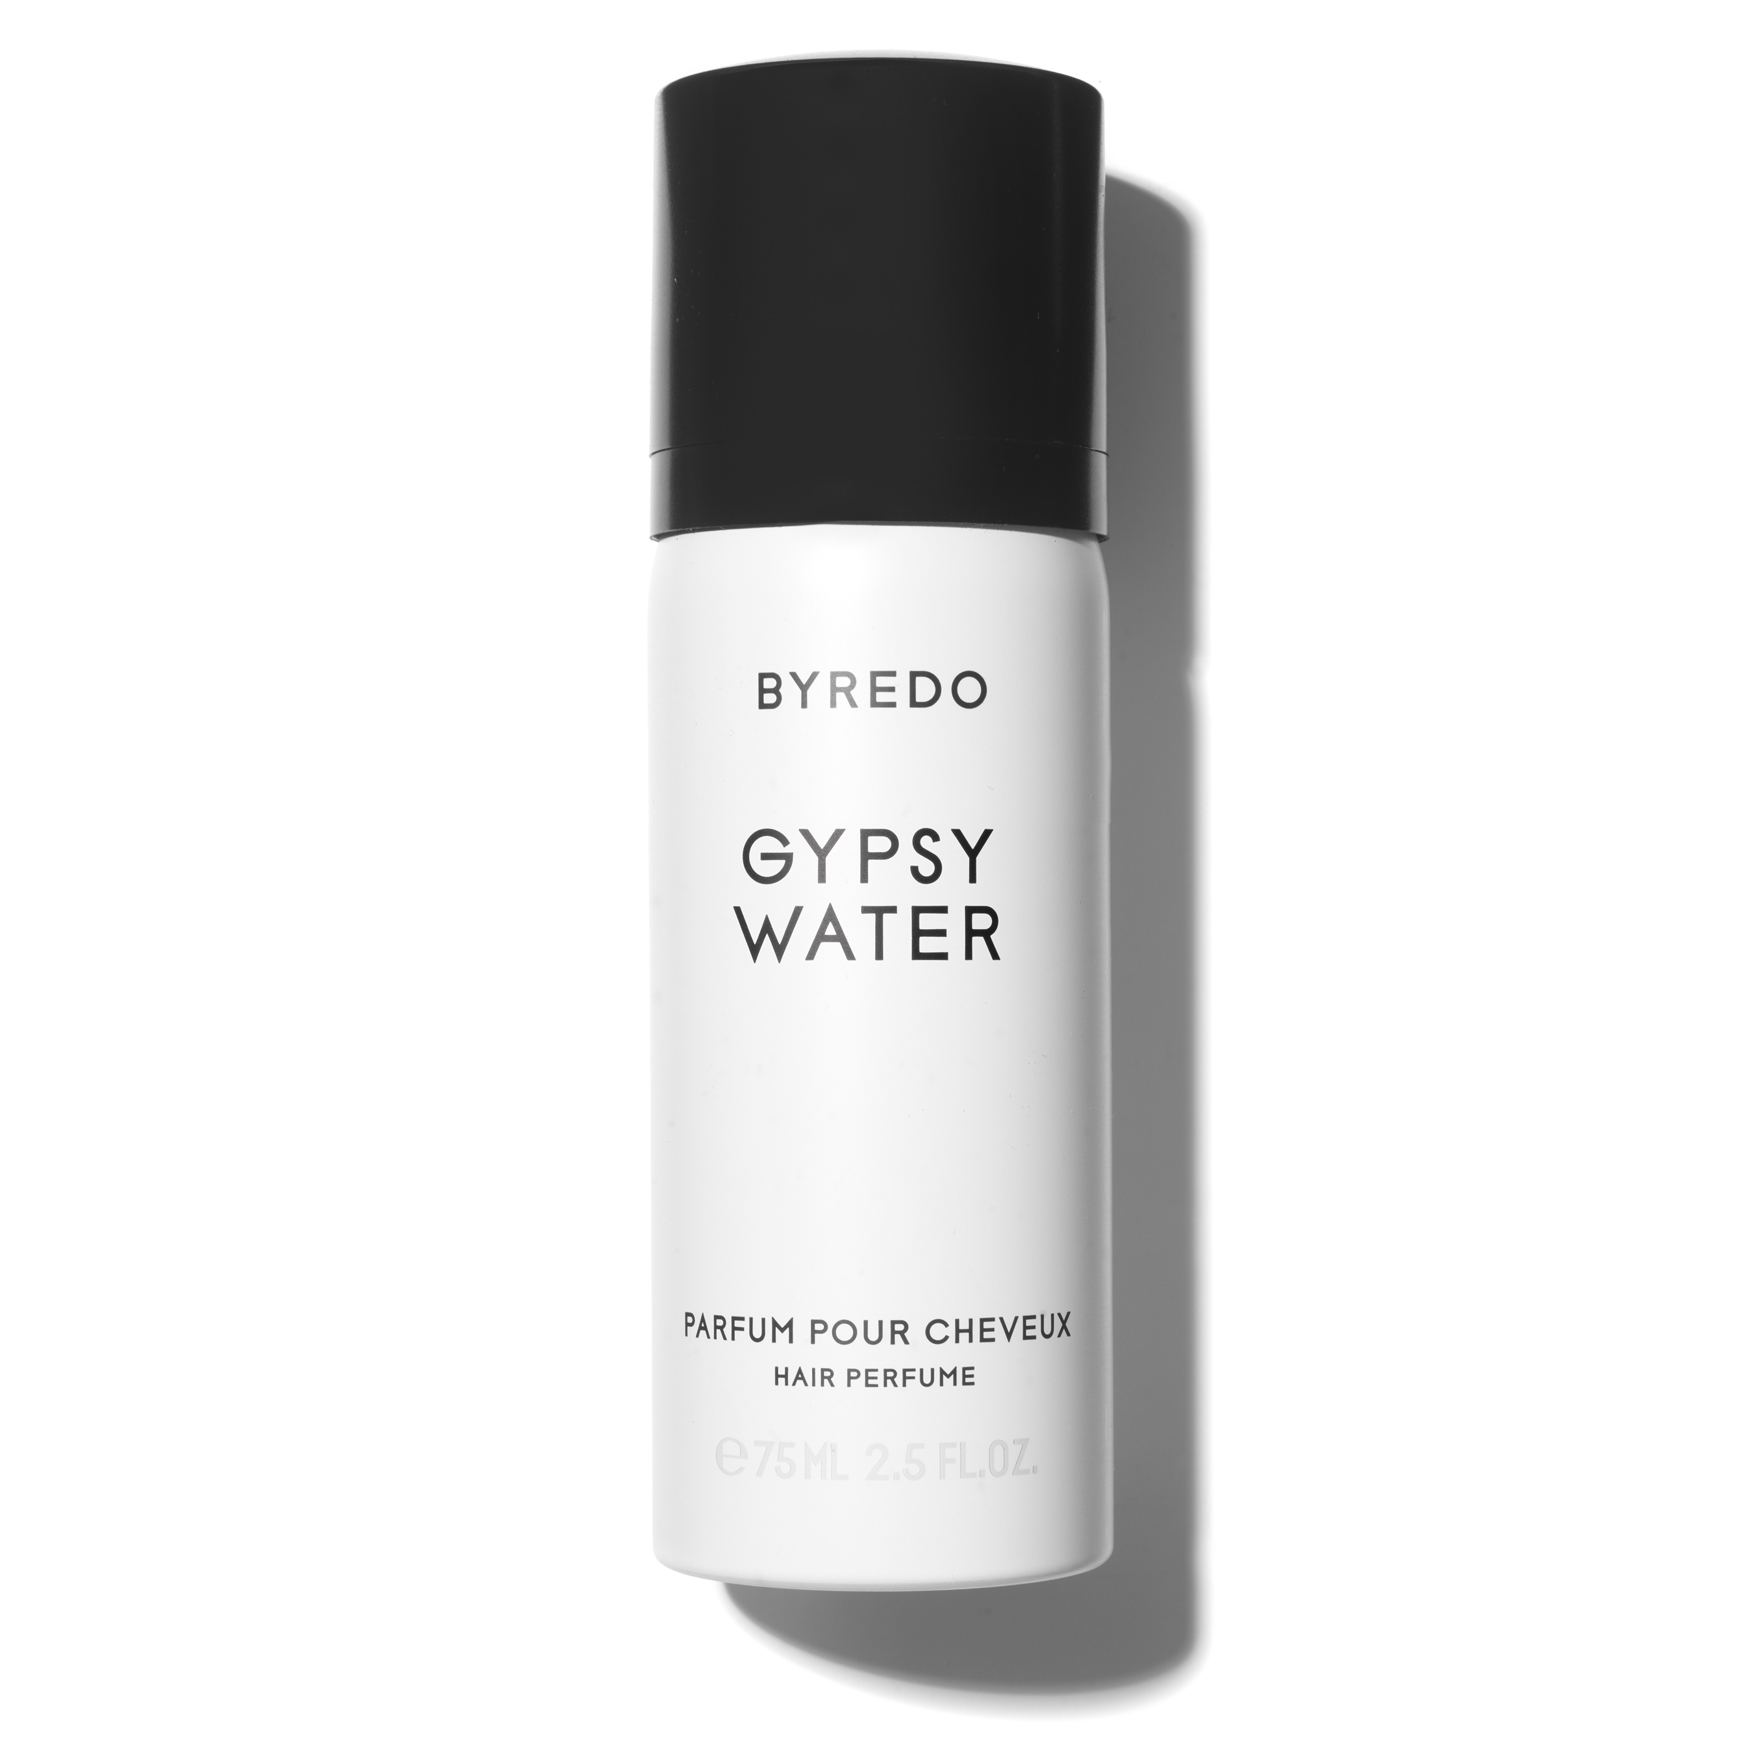 Byredo Gypsy Water Hair Perfume | Space NK